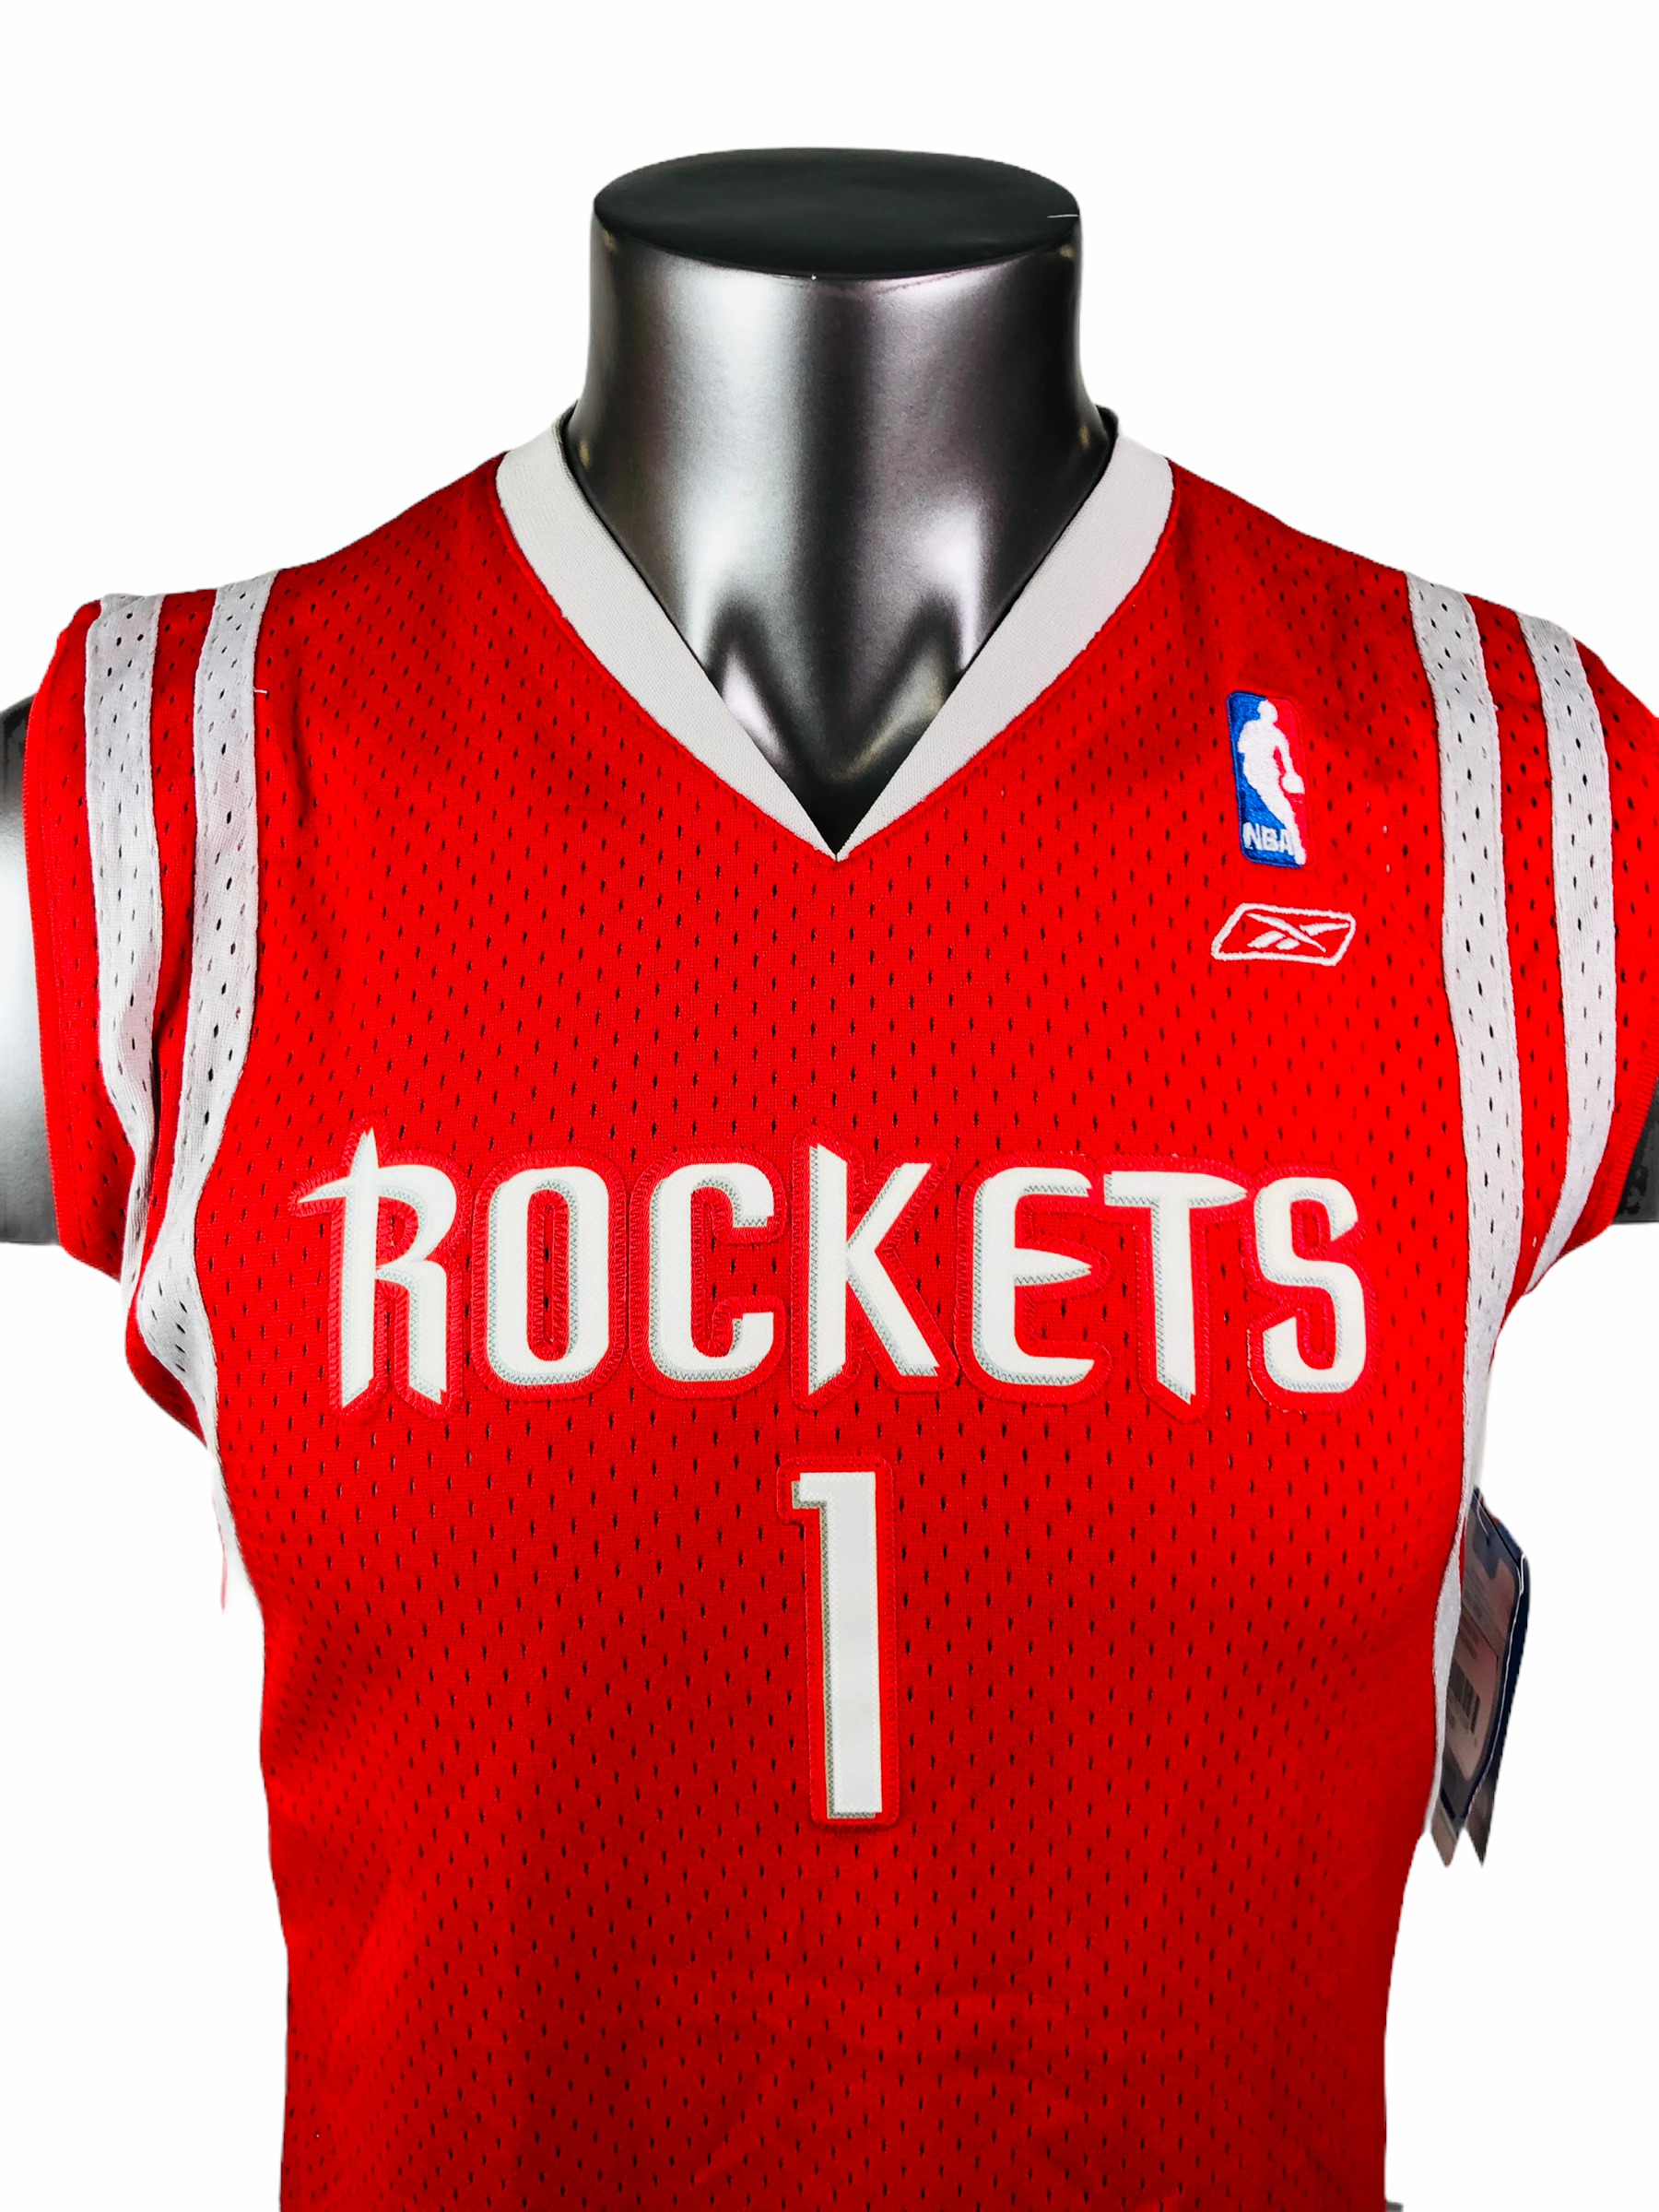 vintage rockets jersey